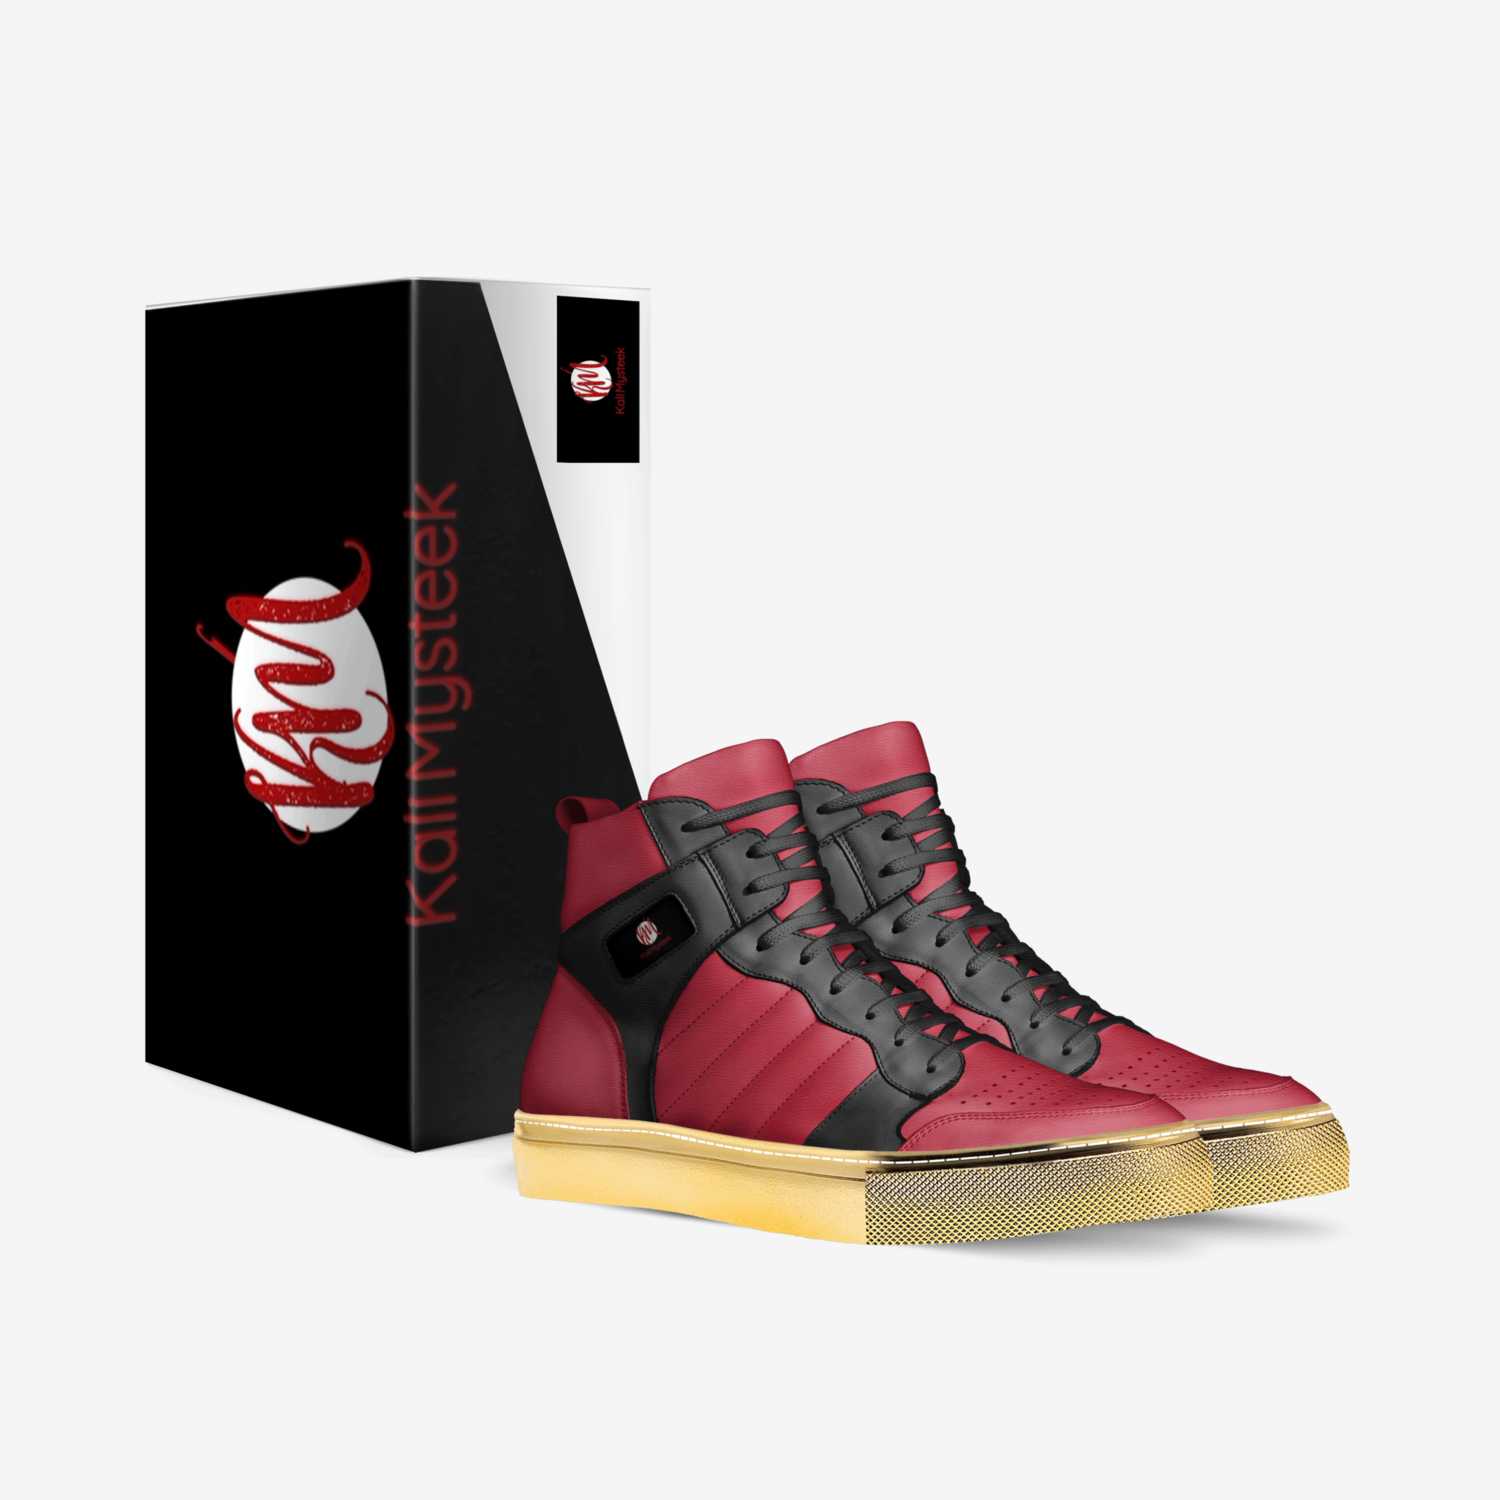 Kalimysteek2 custom made in Italy shoes by Kali Mysteek | Box view